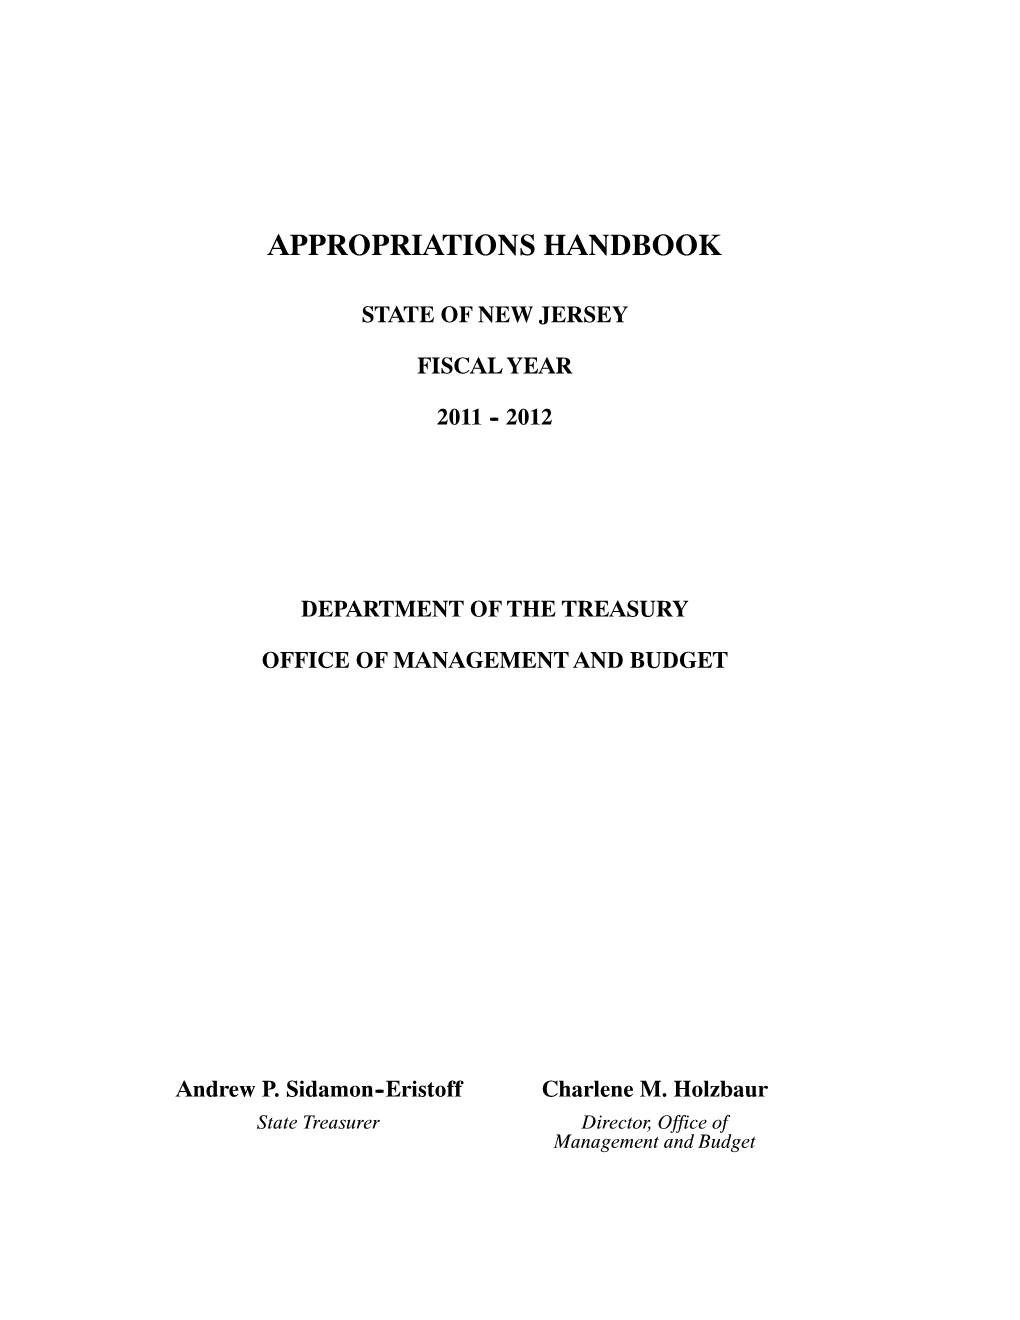 Appropriations Handbook